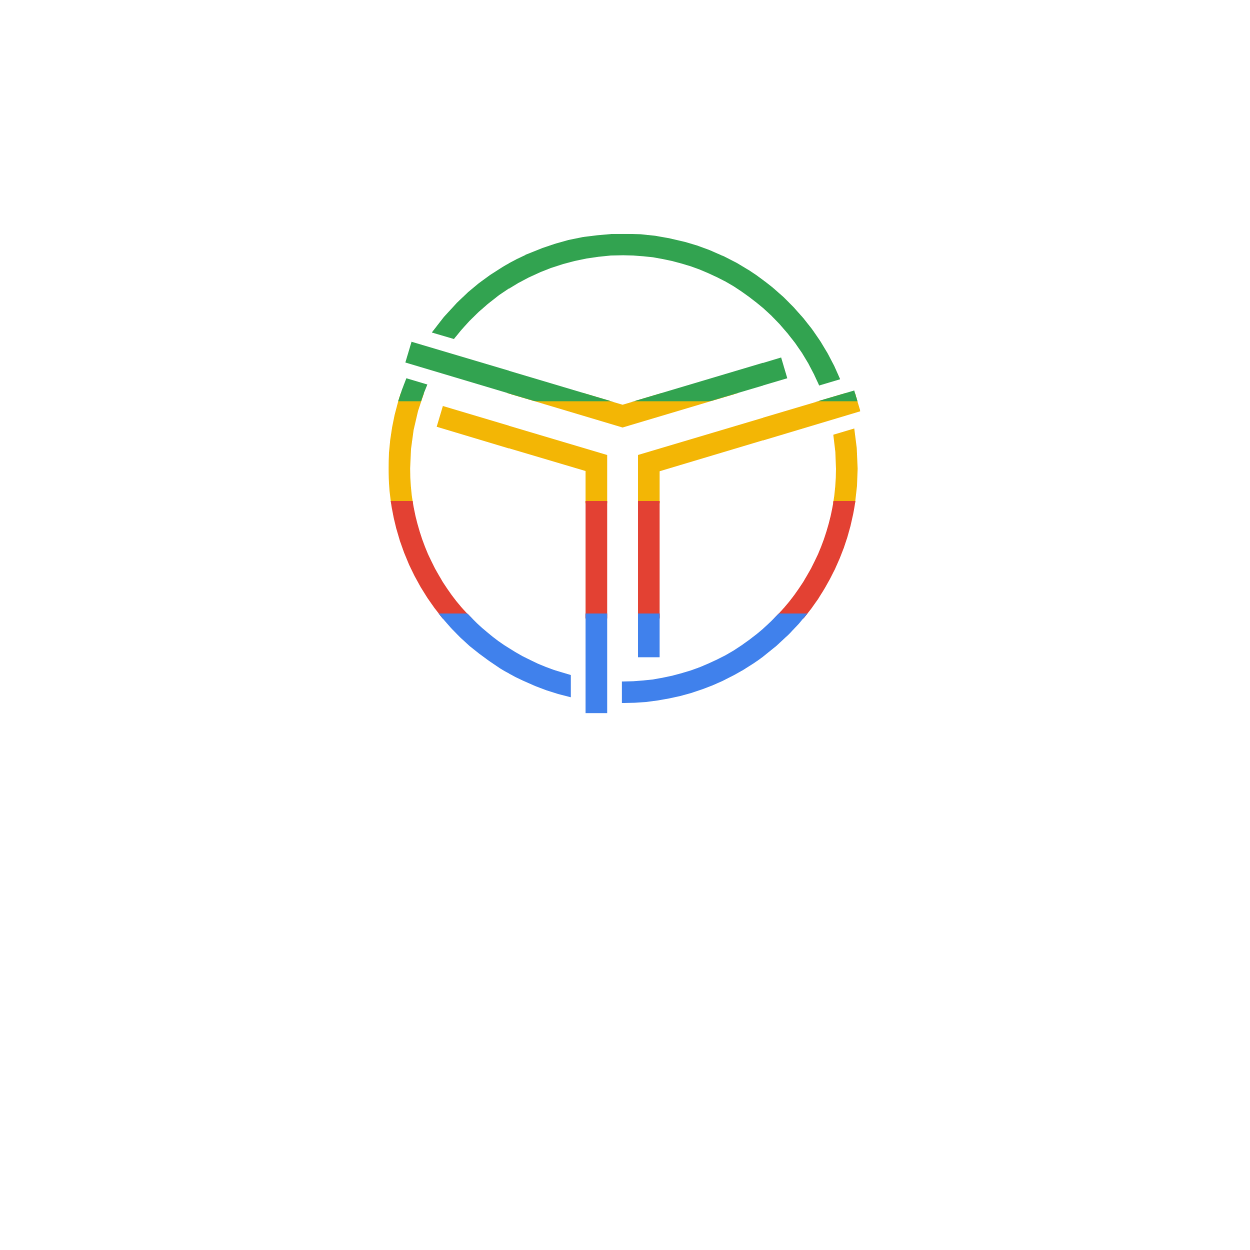 Trinetra Solutions